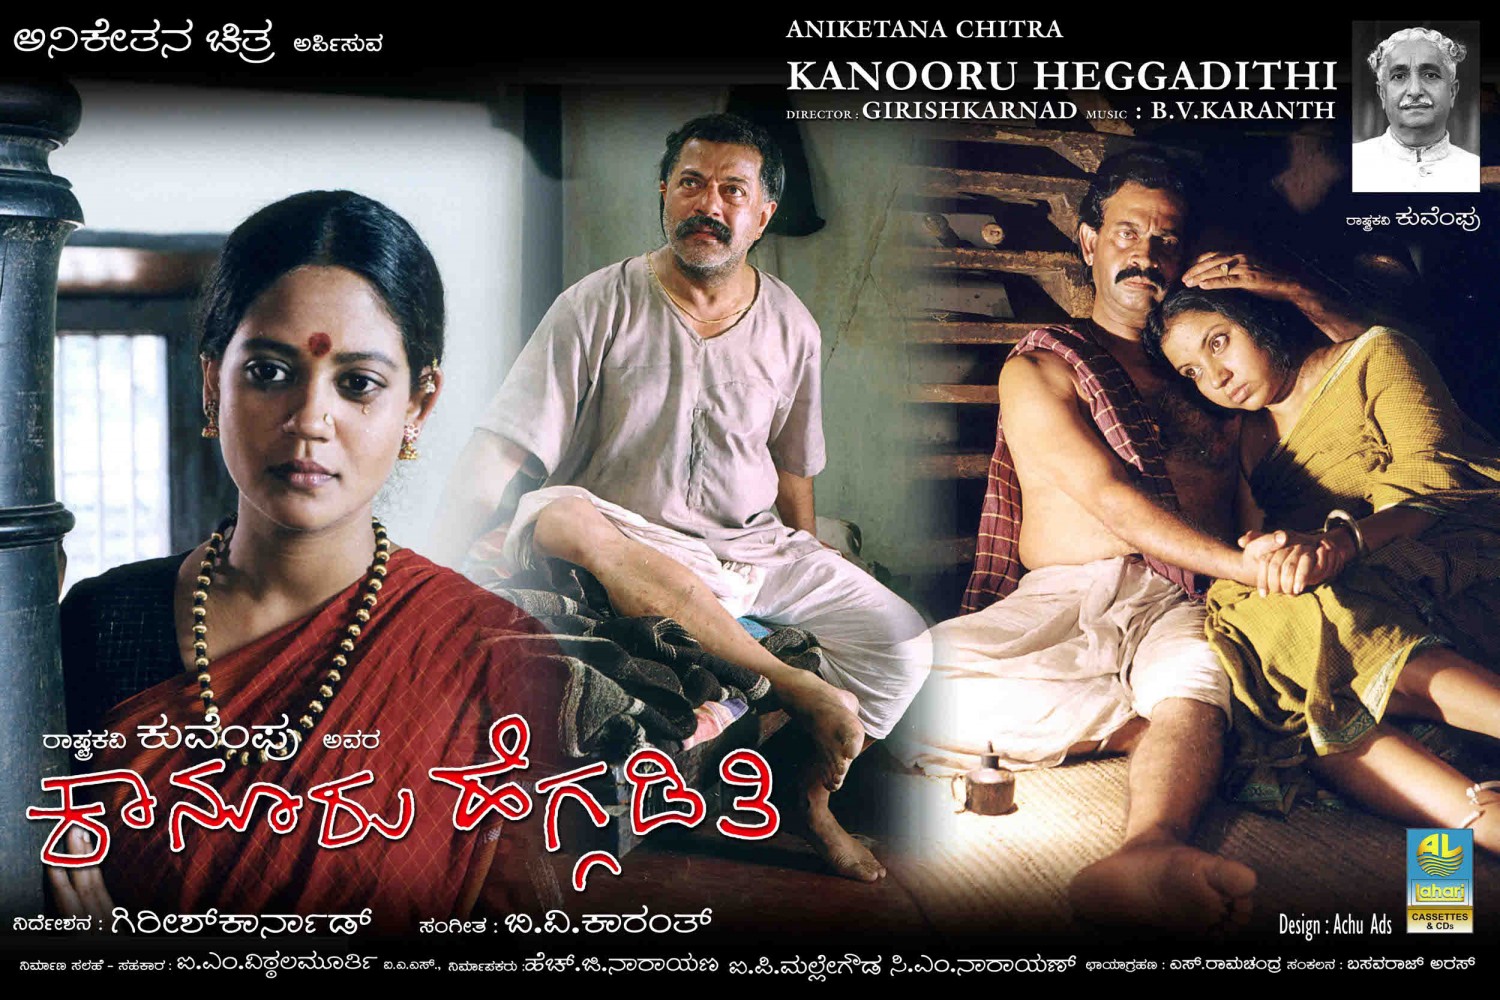 Extra Large Movie Poster Image for Kanooru Heggadithi (#3 of 4)